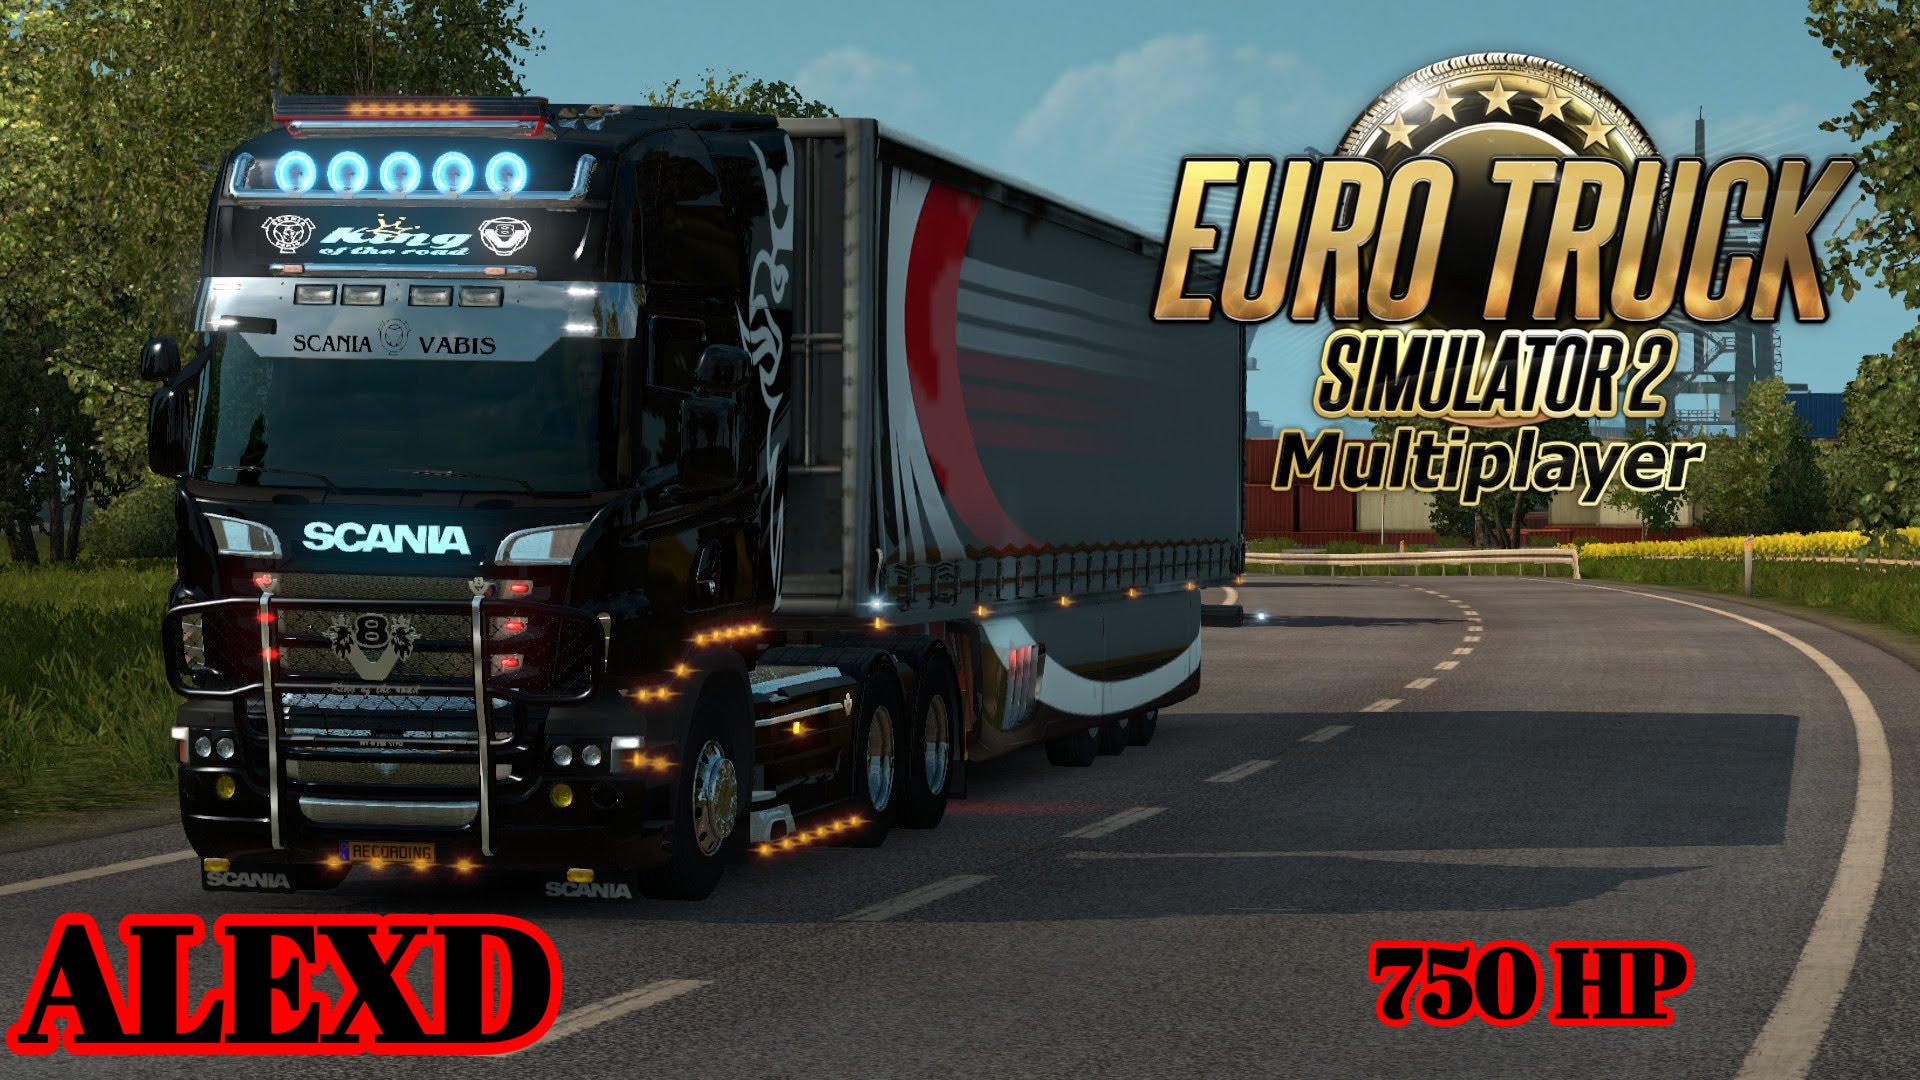 Етс2 длс. Евро трек симулятор 2 стрим. Euro Truck Simulator 2 мультиплеер стрим. DAF XF 2021 ETS 2. Euro Truck Simulator 1 мультиплеер.